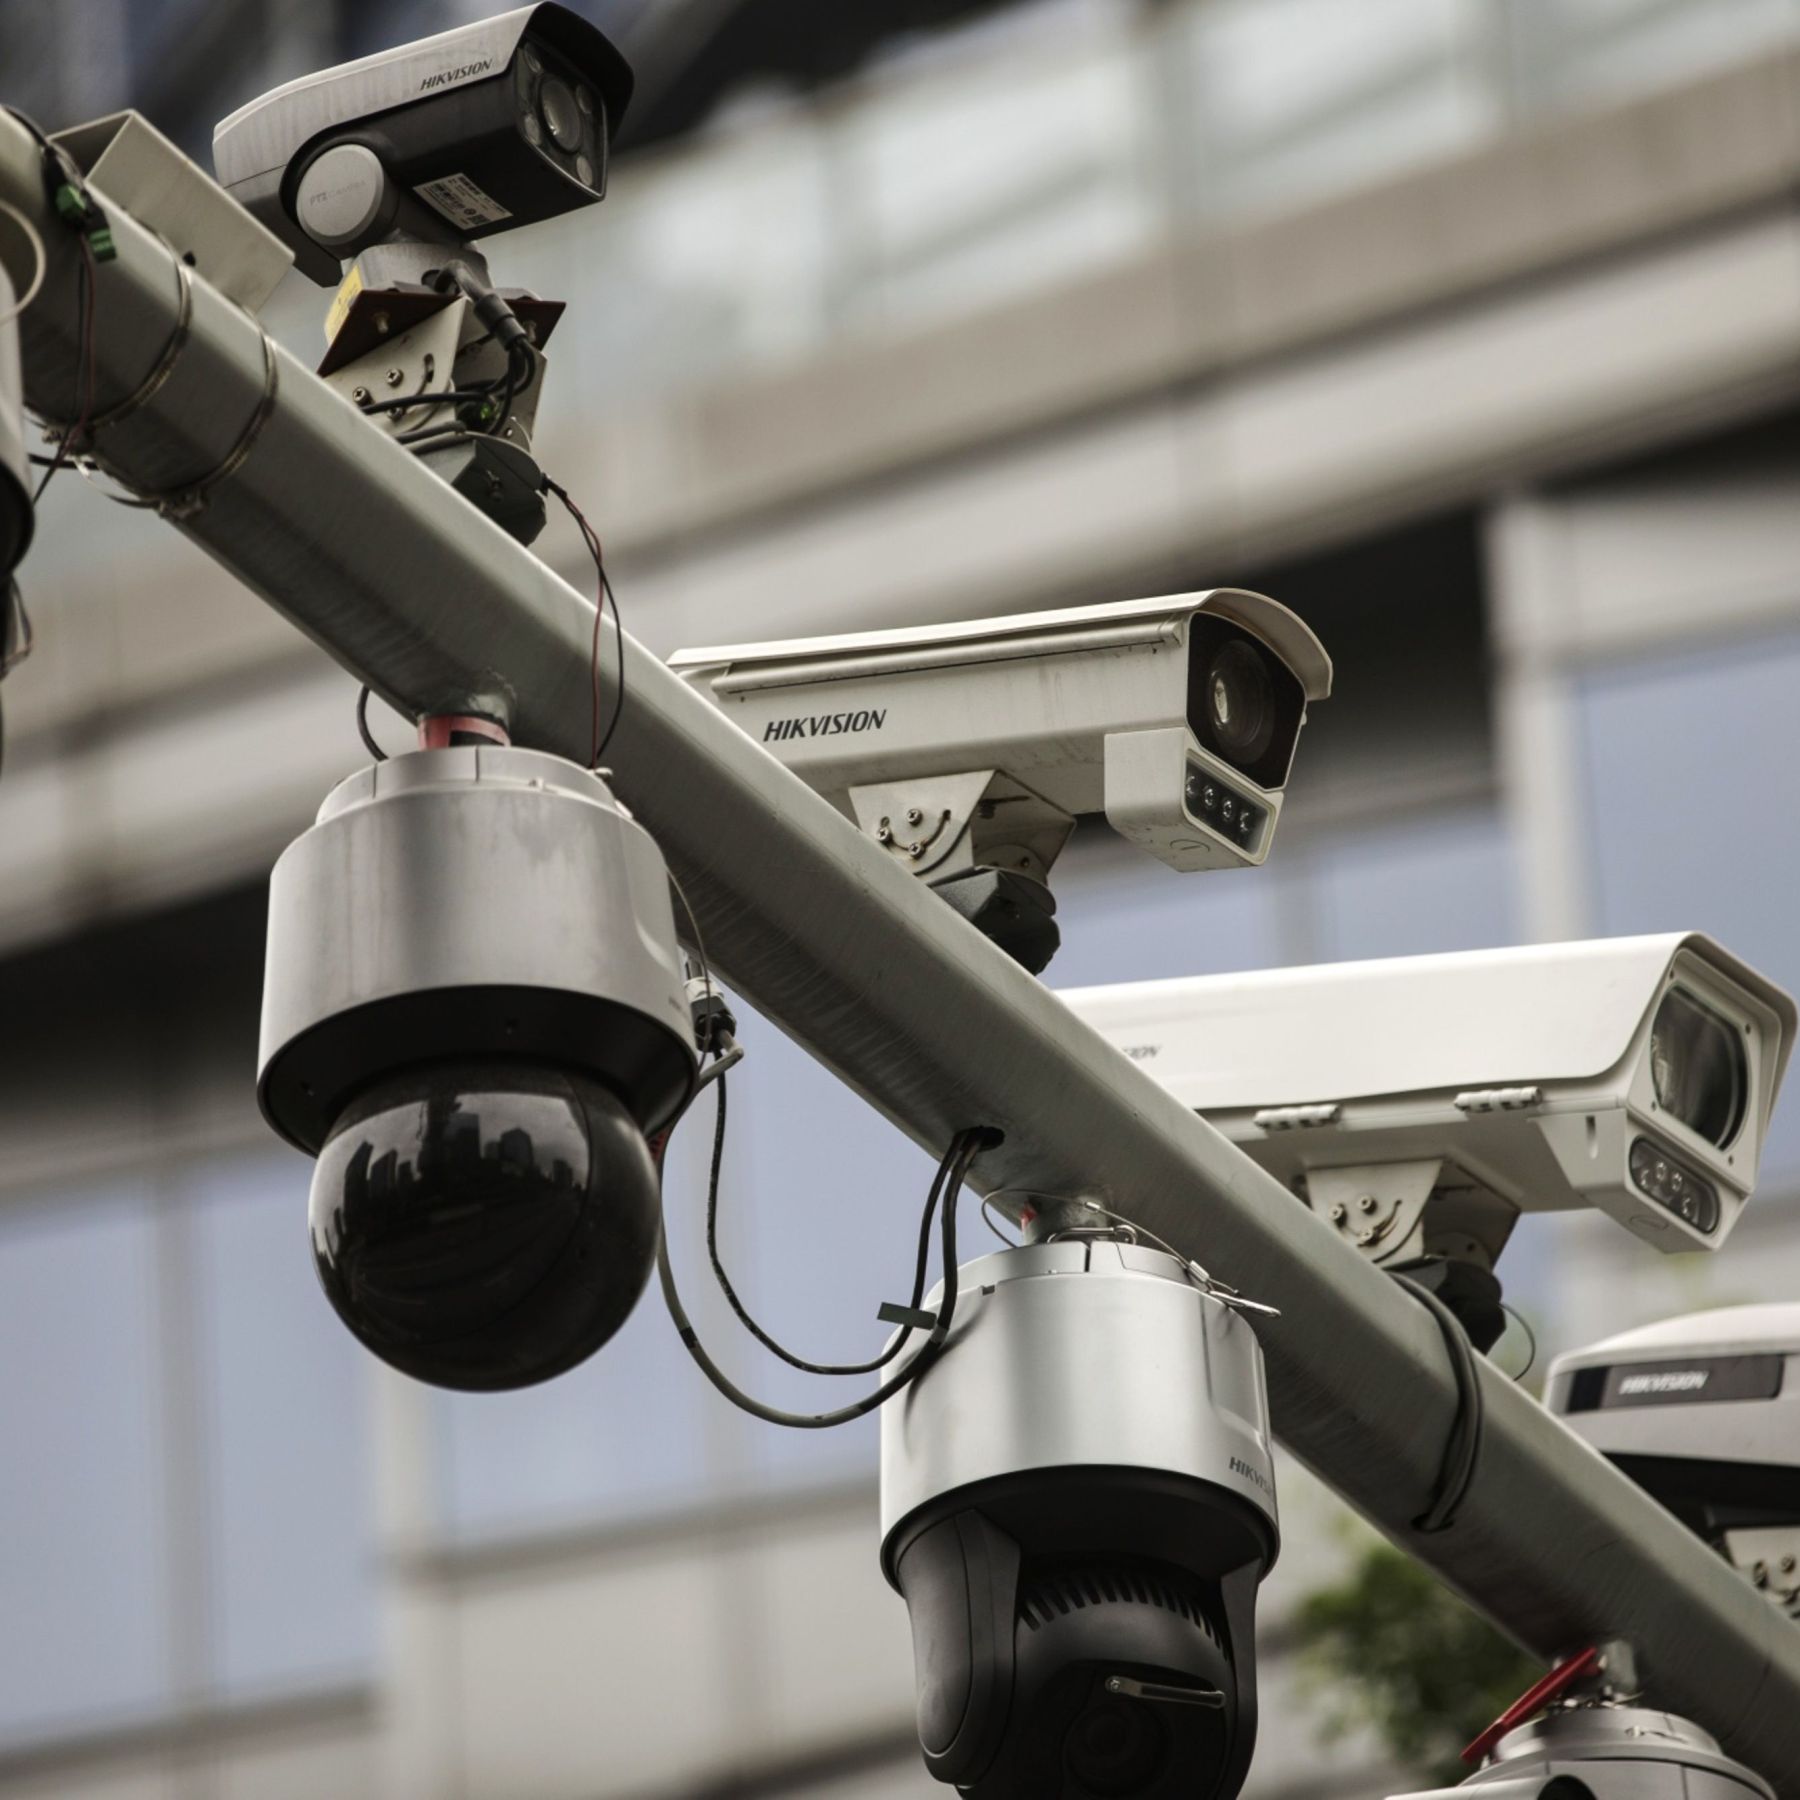 US may ban Chinese surveillance cameras, citing security risks | Technology News | Al Jazeera